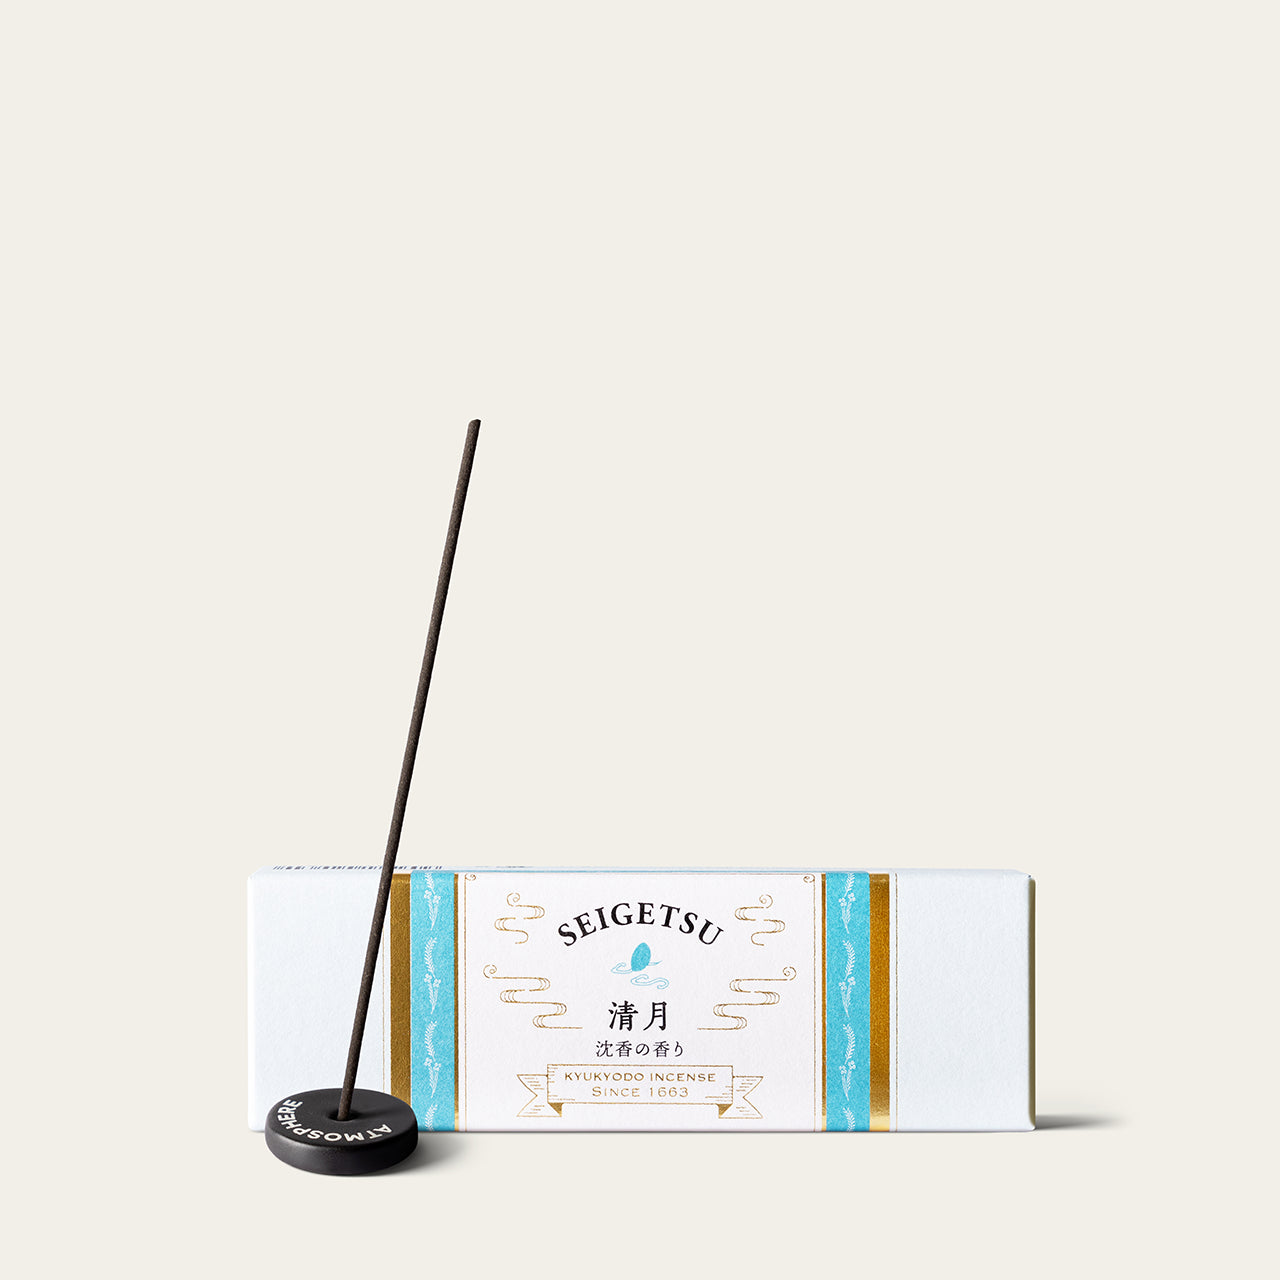 Kyukyodo Clear Moon Seigetsu 10cm Japanese incense sticks (85 sticks) with Atmosphere ceramic incense holder